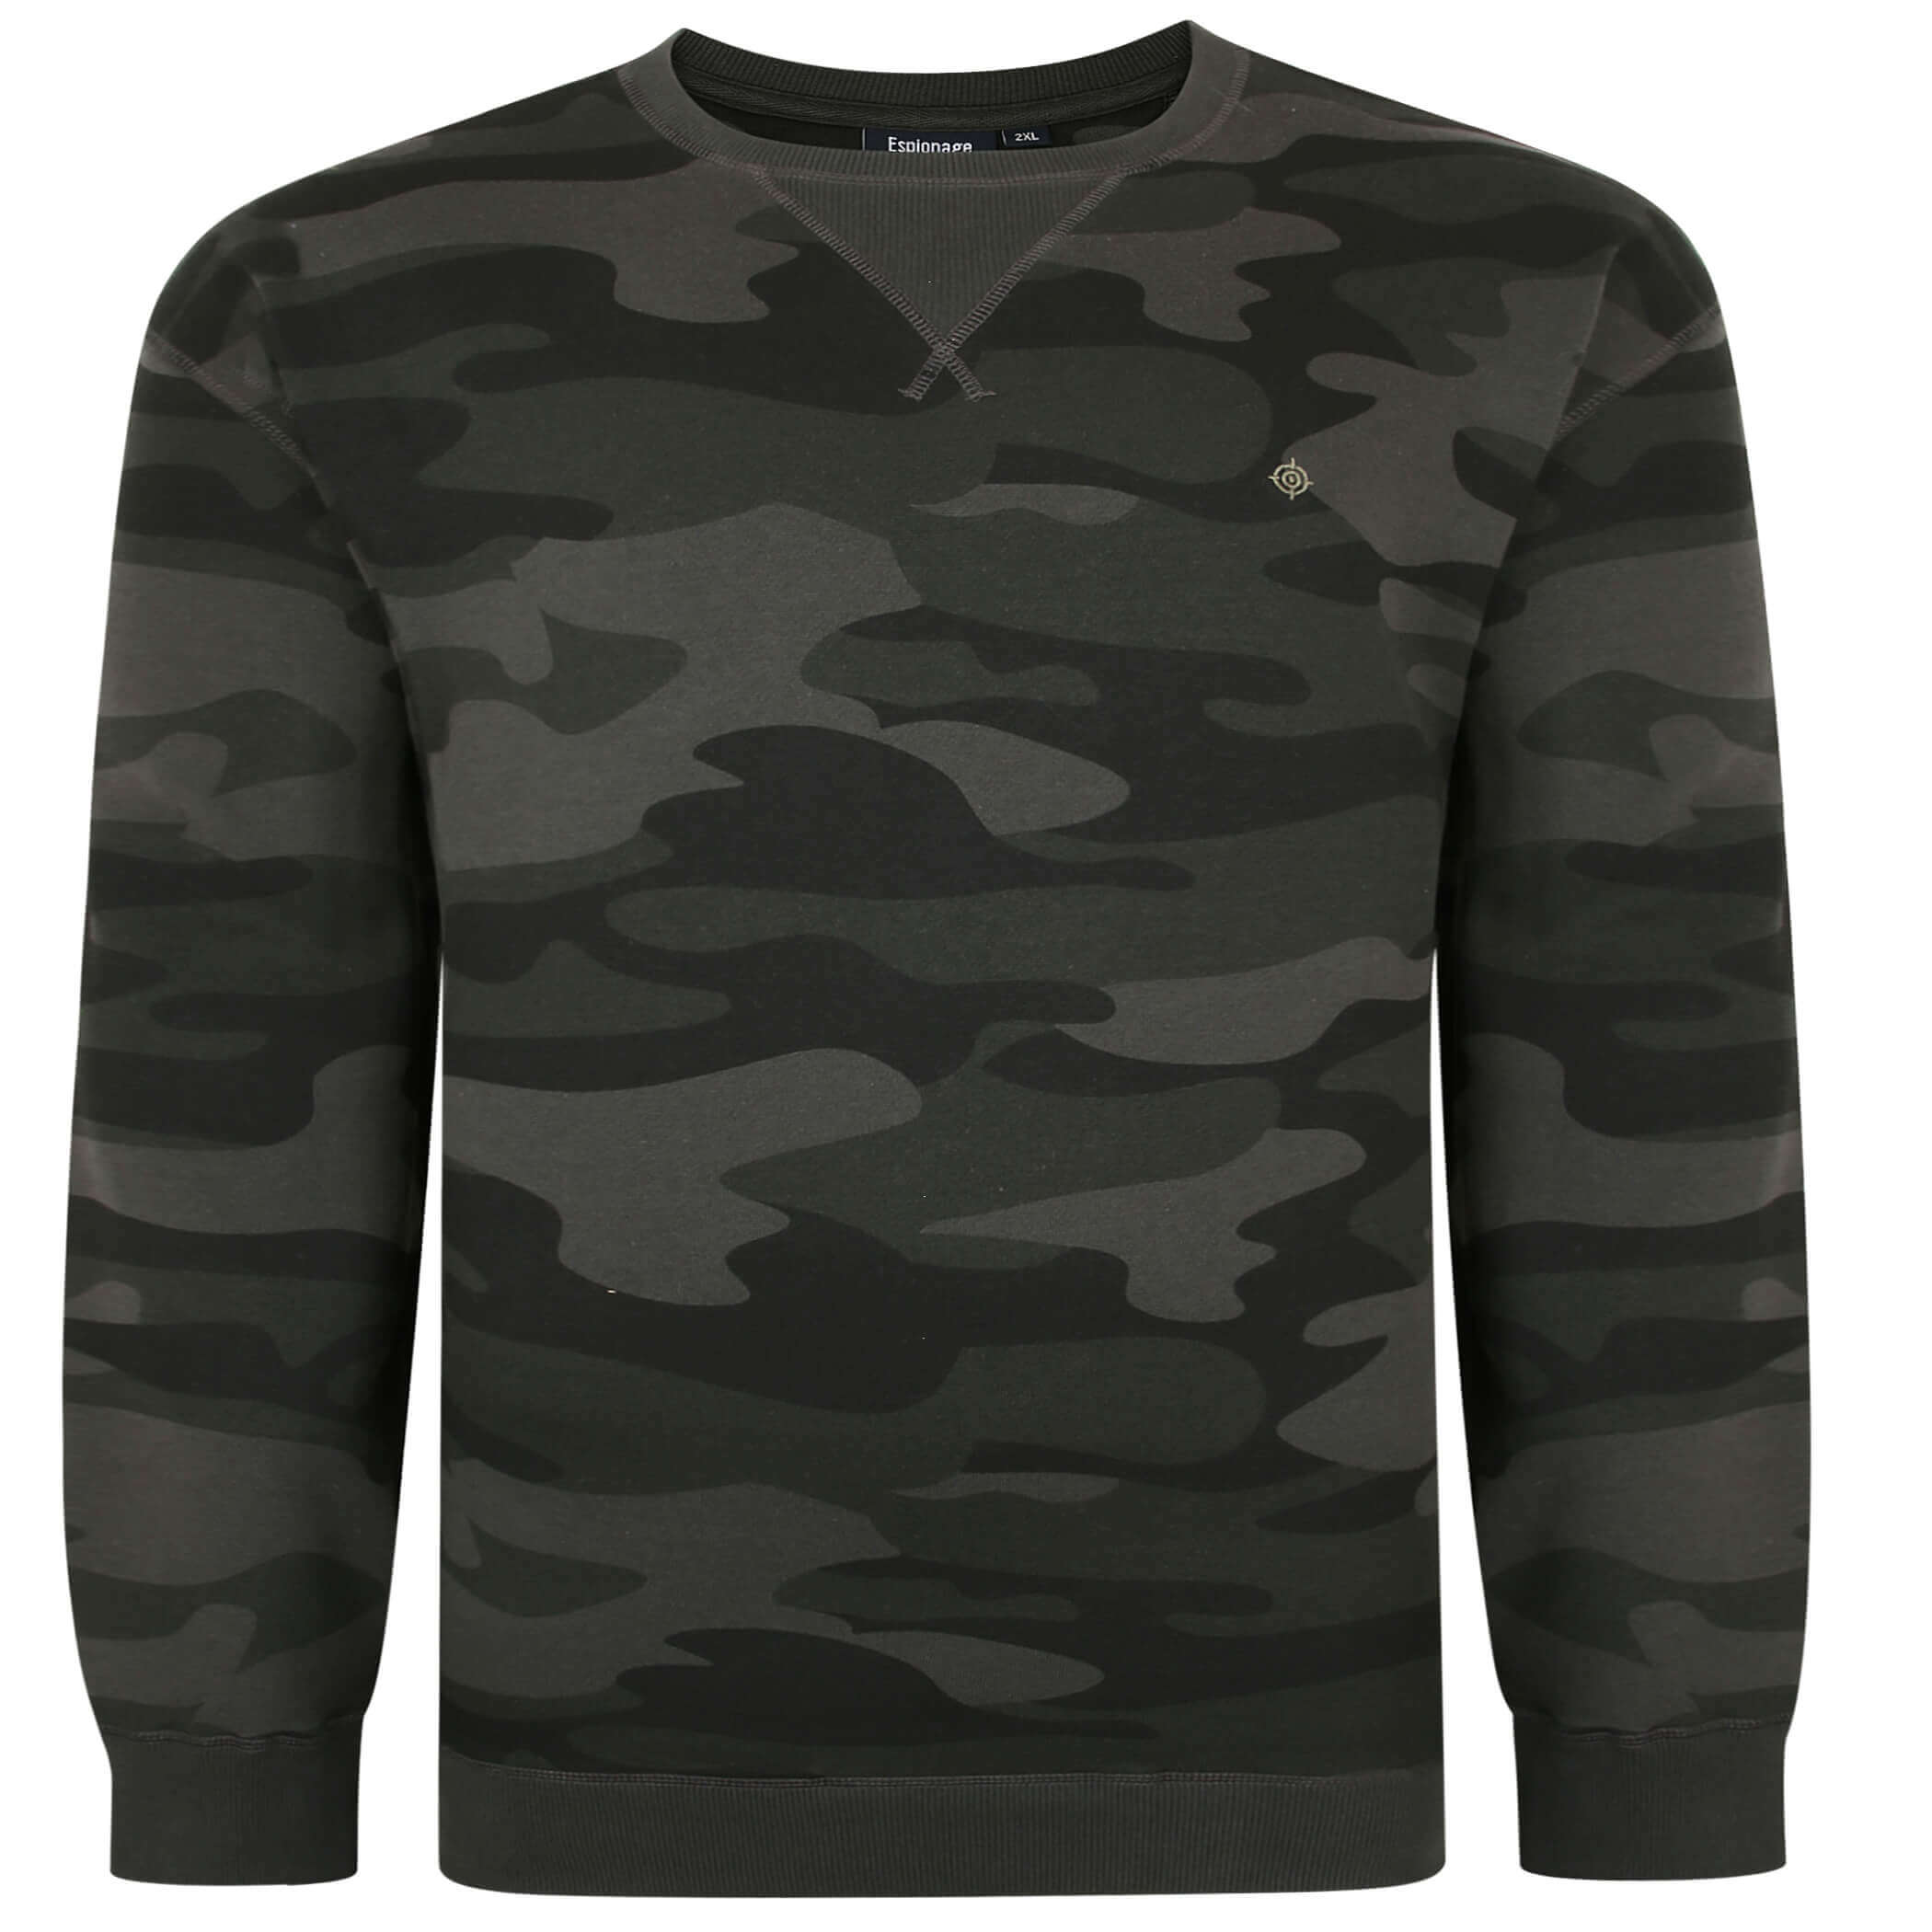 Espionage Camouflage Sweatshirt